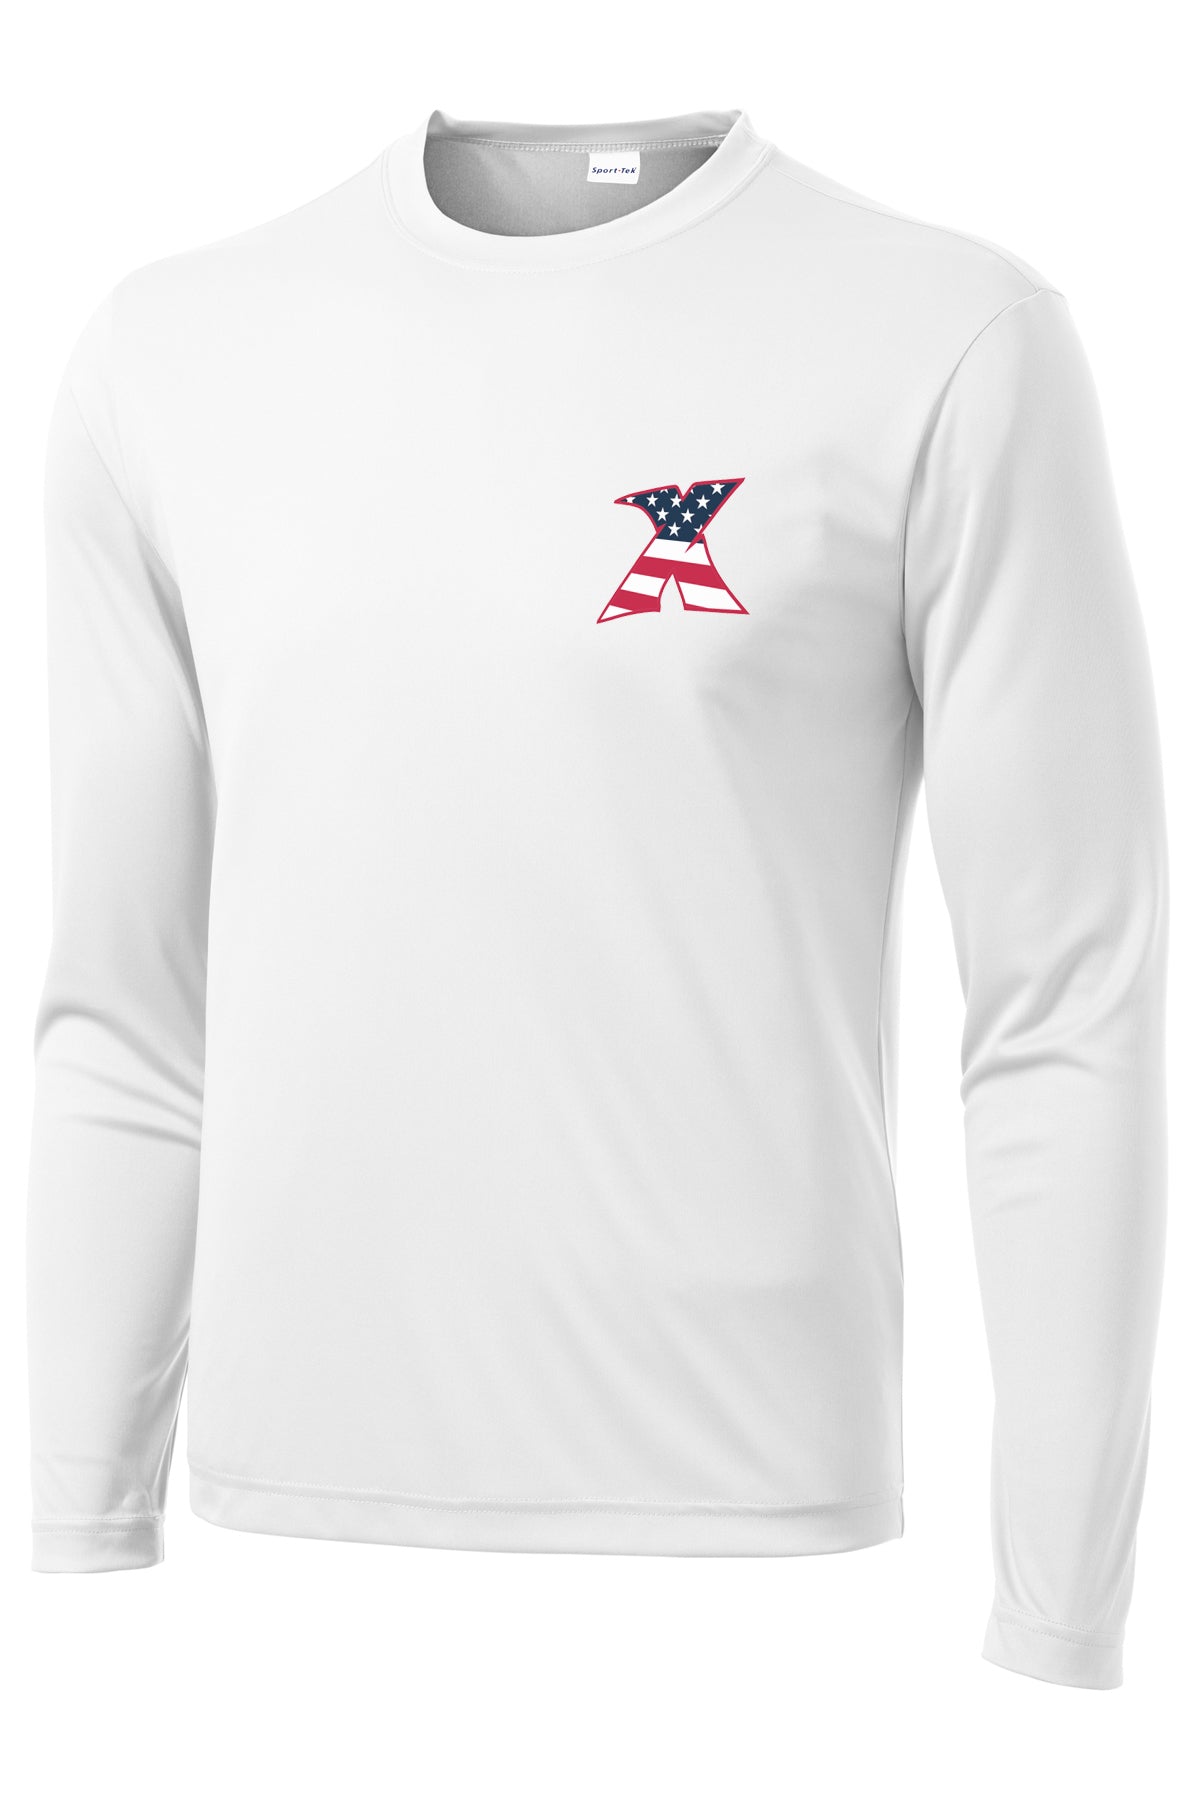 MDX Long Sleeve Performance Shirt